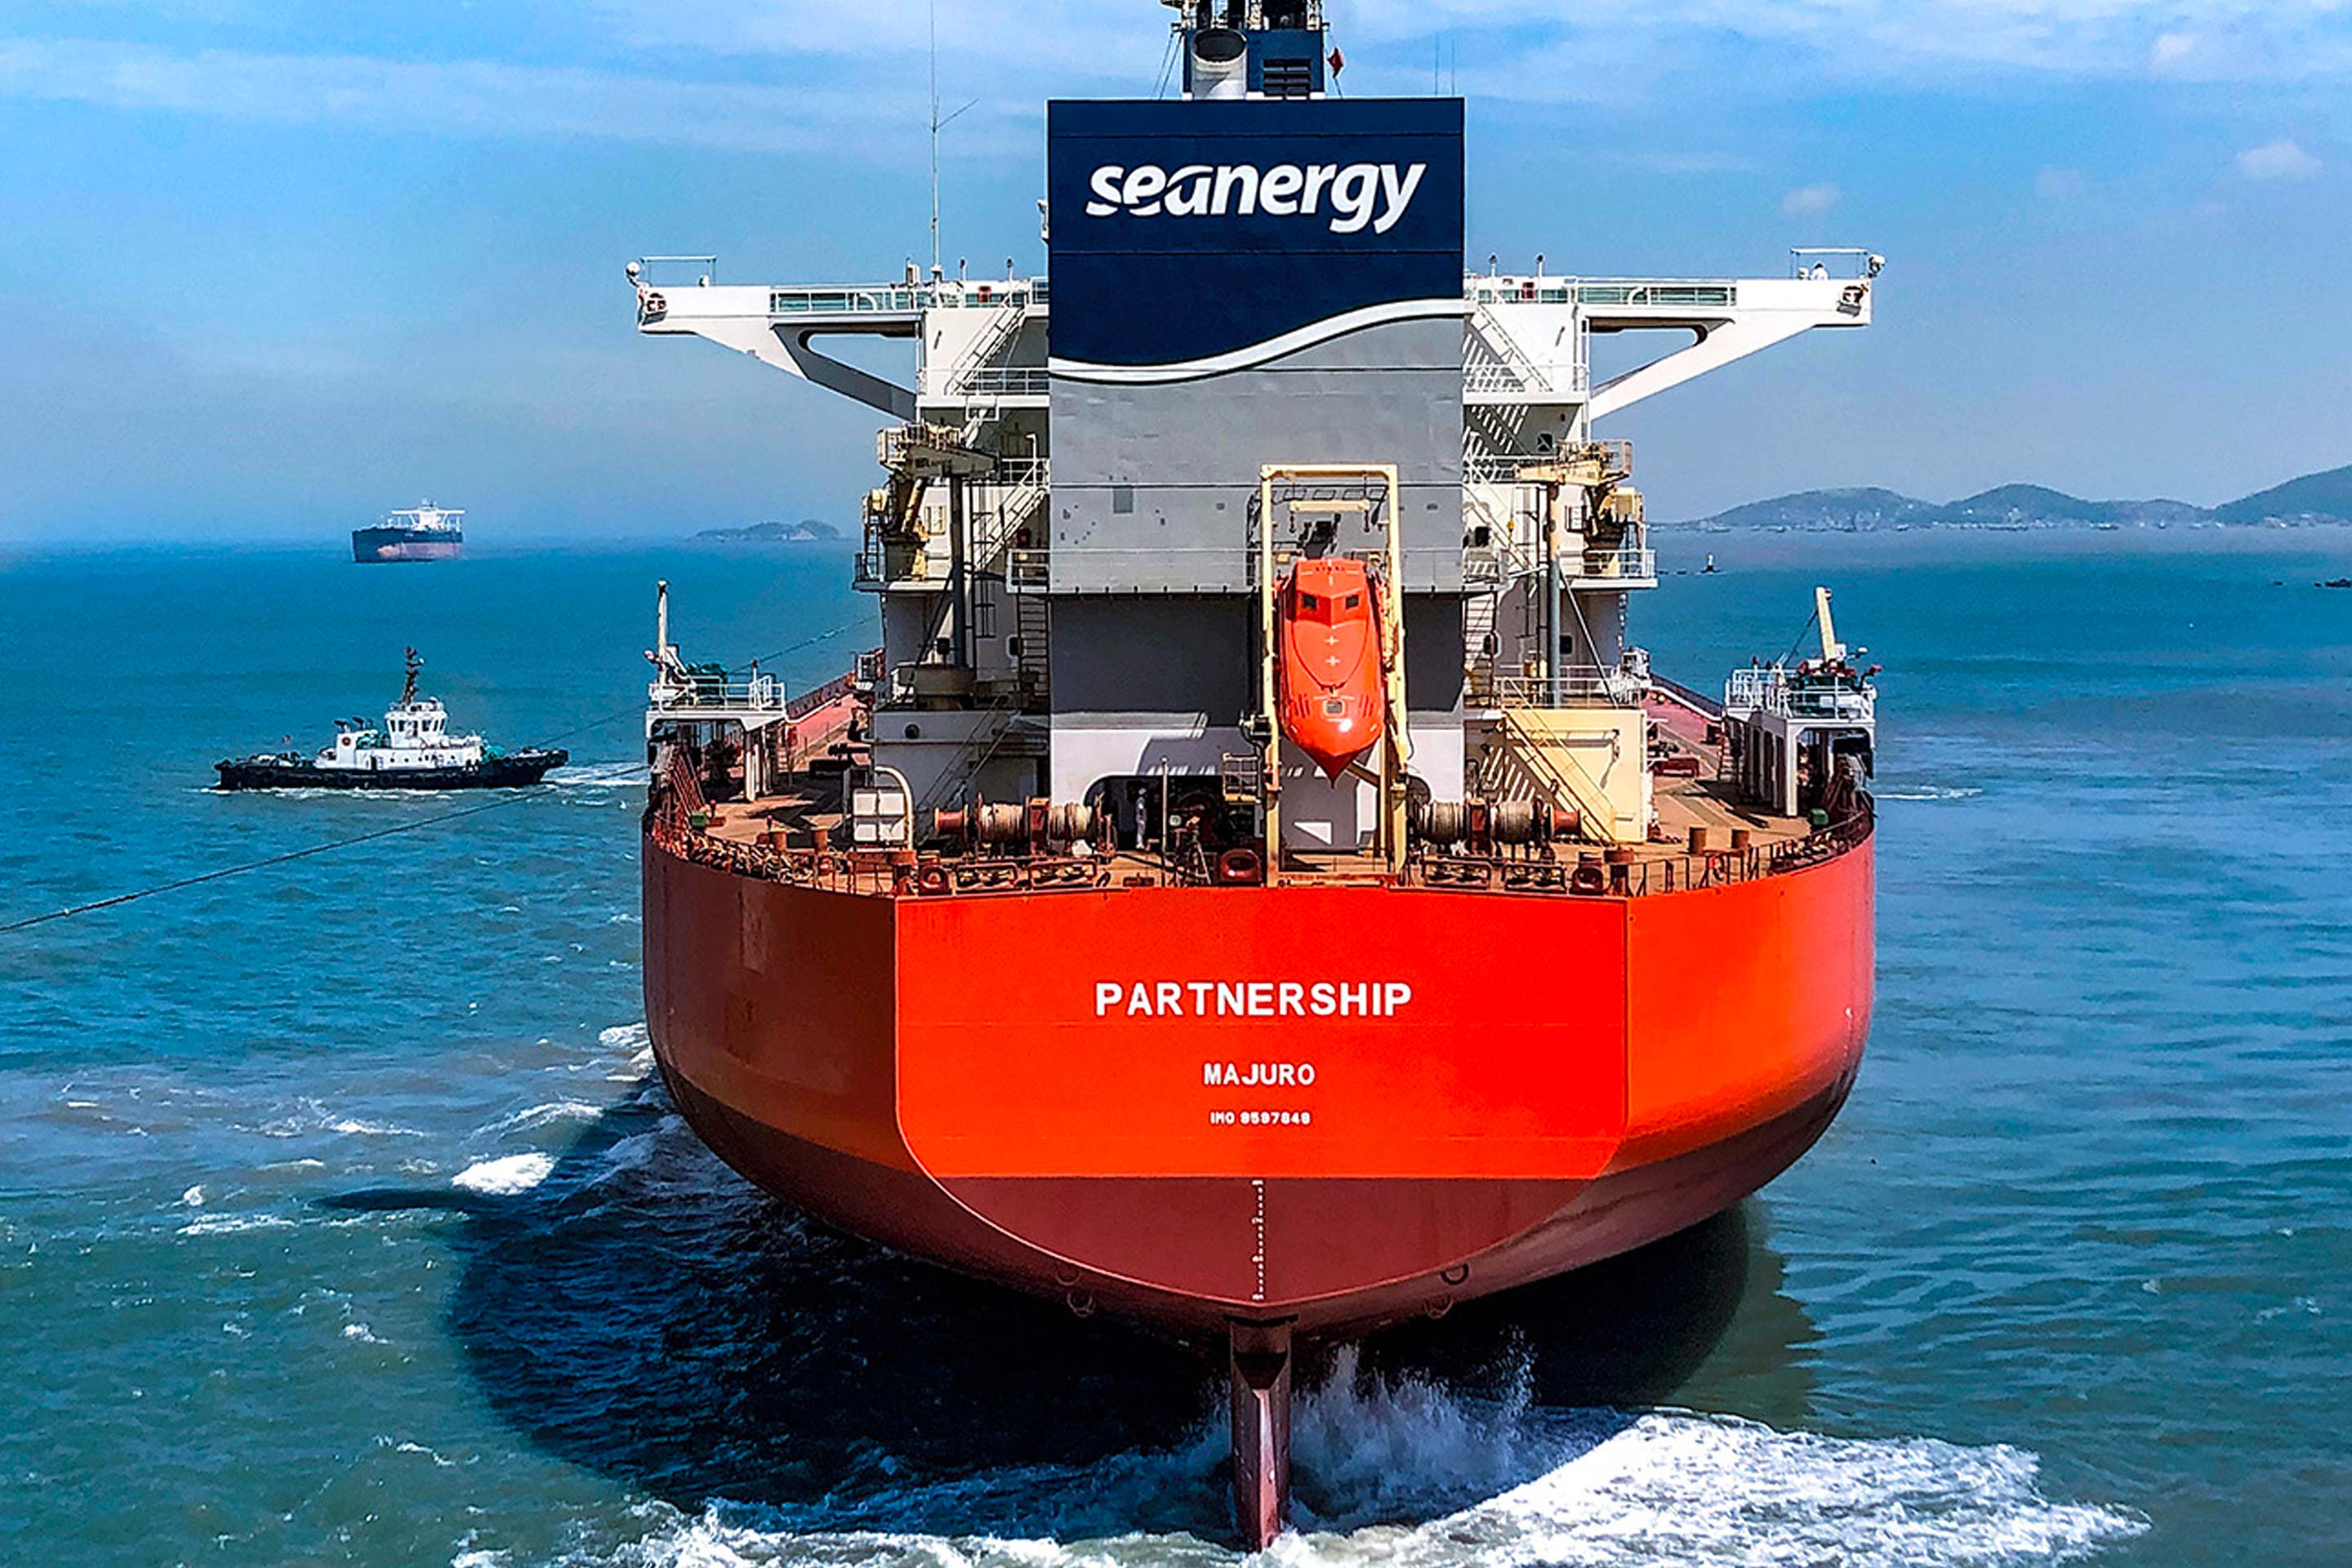 A Seanergy vessel at sea